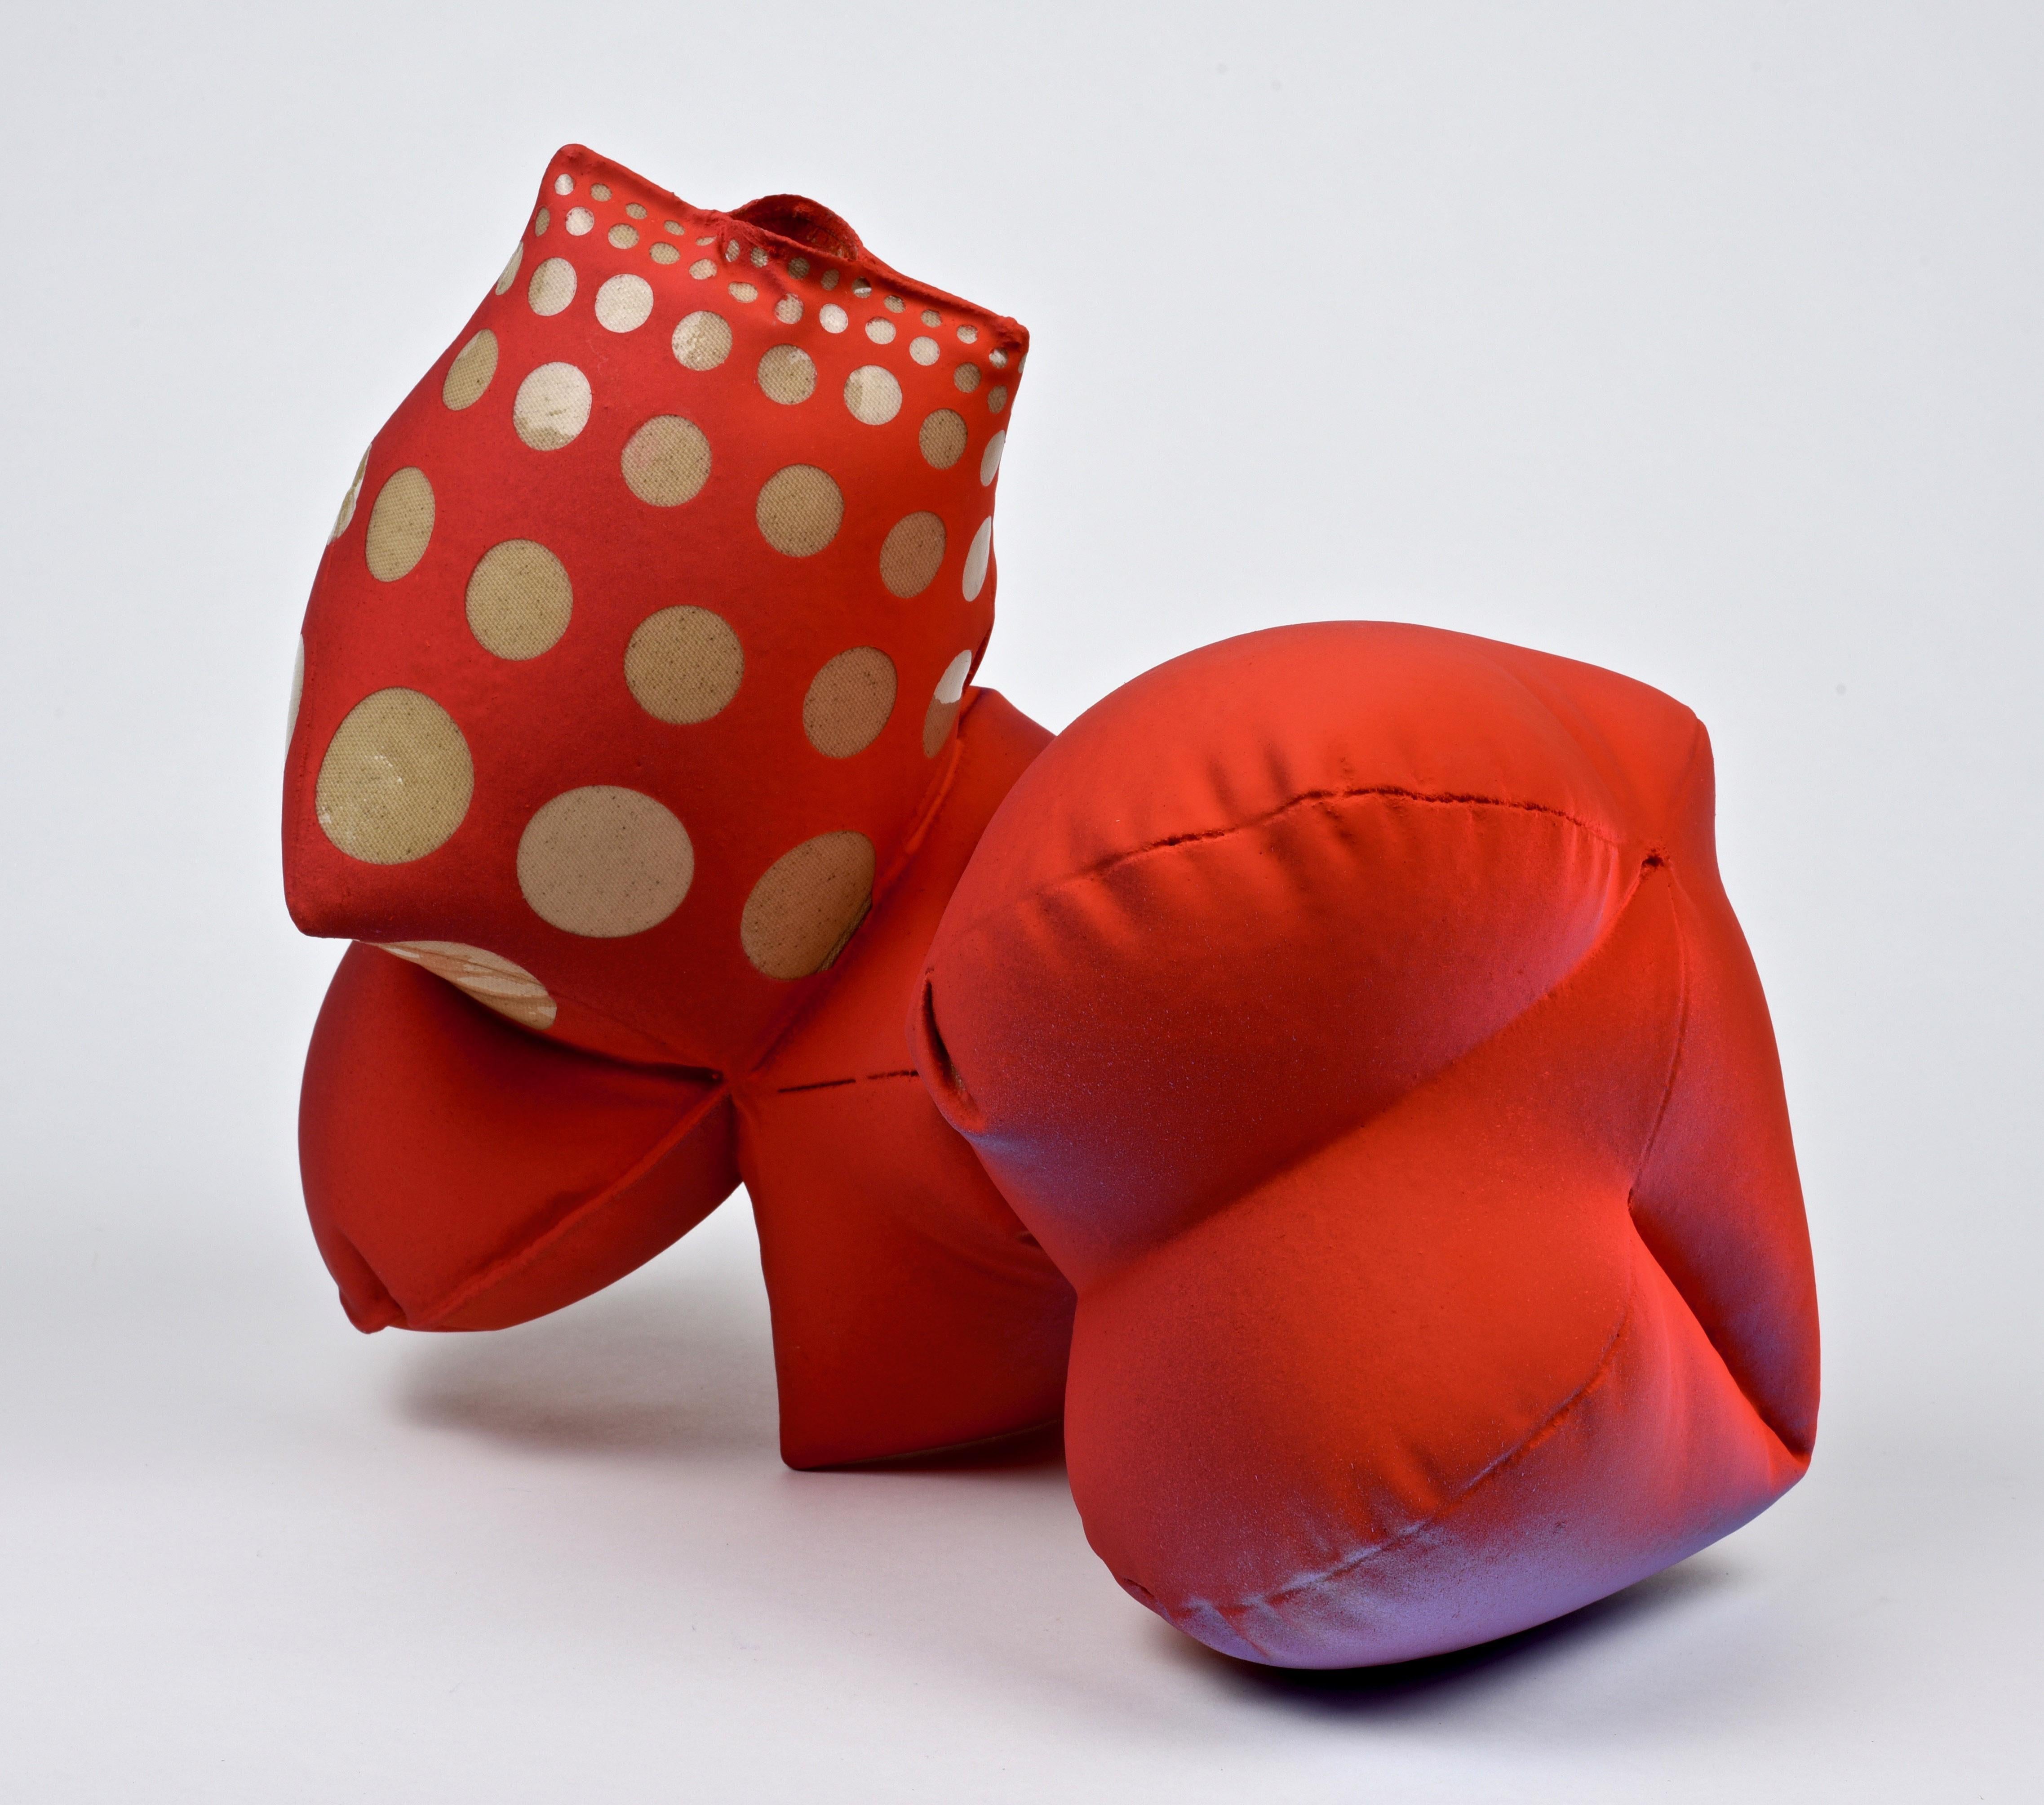 Jeremy Thomas Abstract Sculpture – Erdbeer-Mürbegebäck